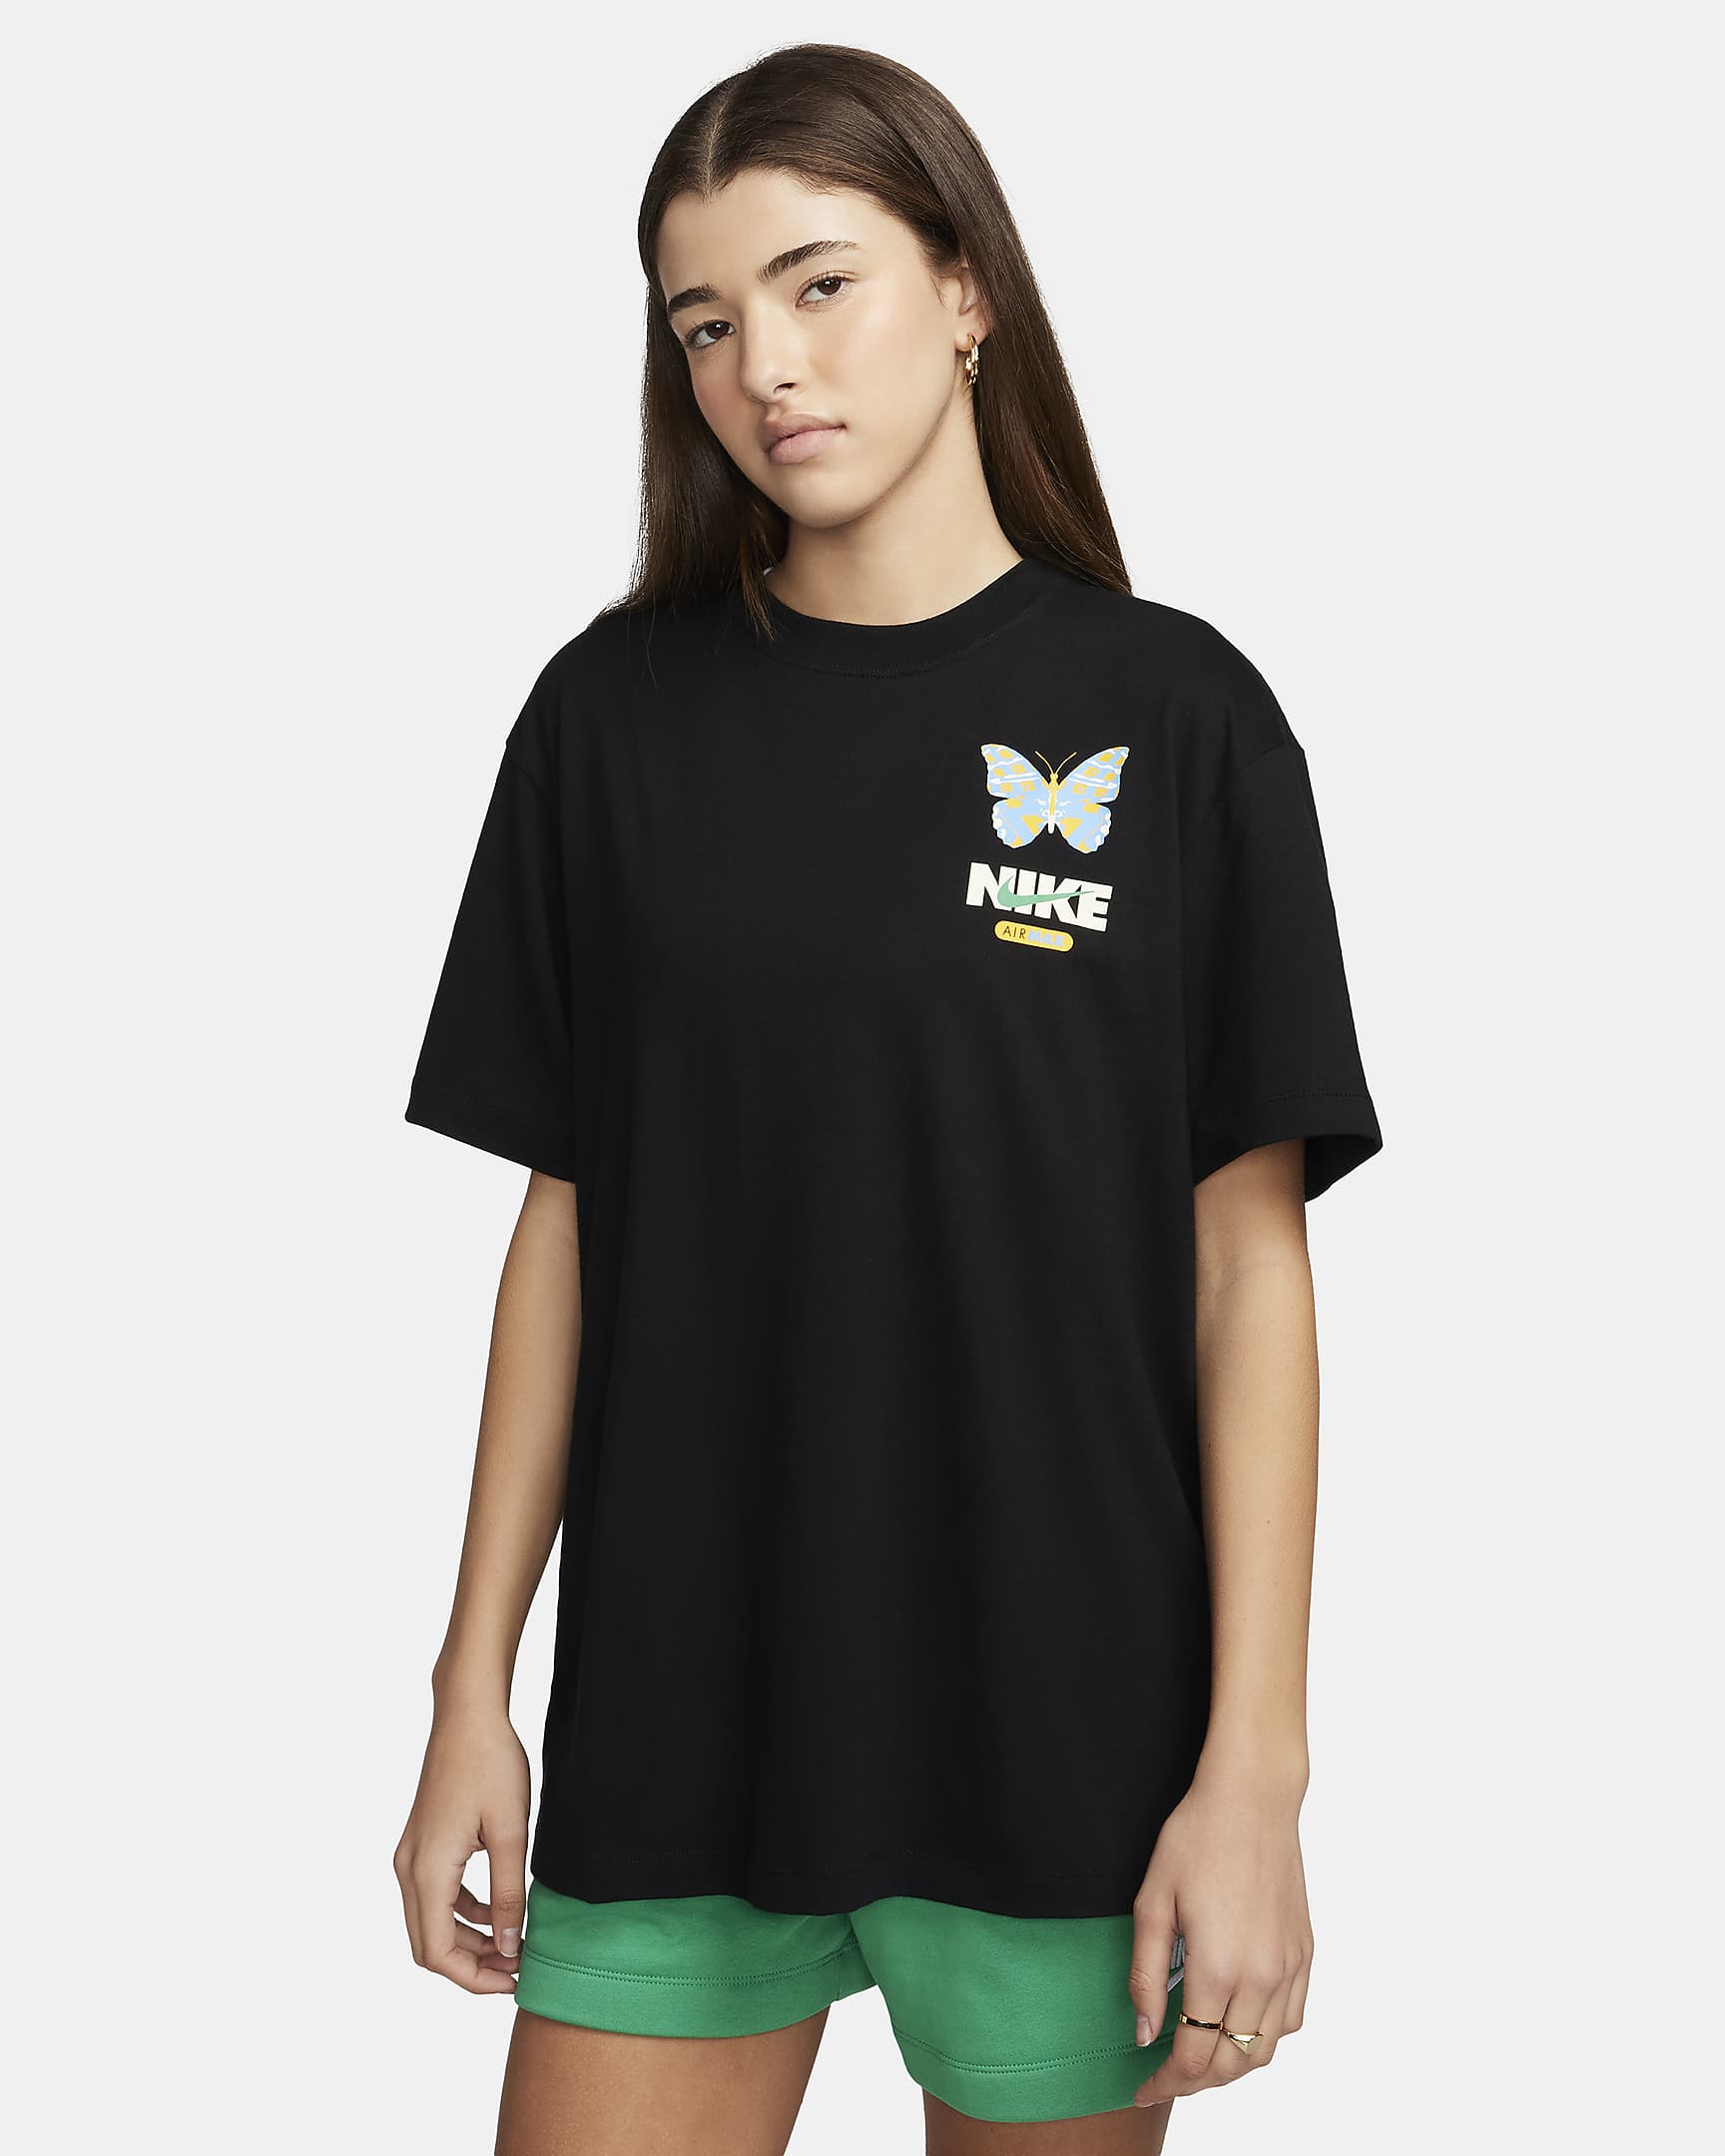 Nike Sportswear Women's Graphic Boyfriend T-Shirt. Nike LU